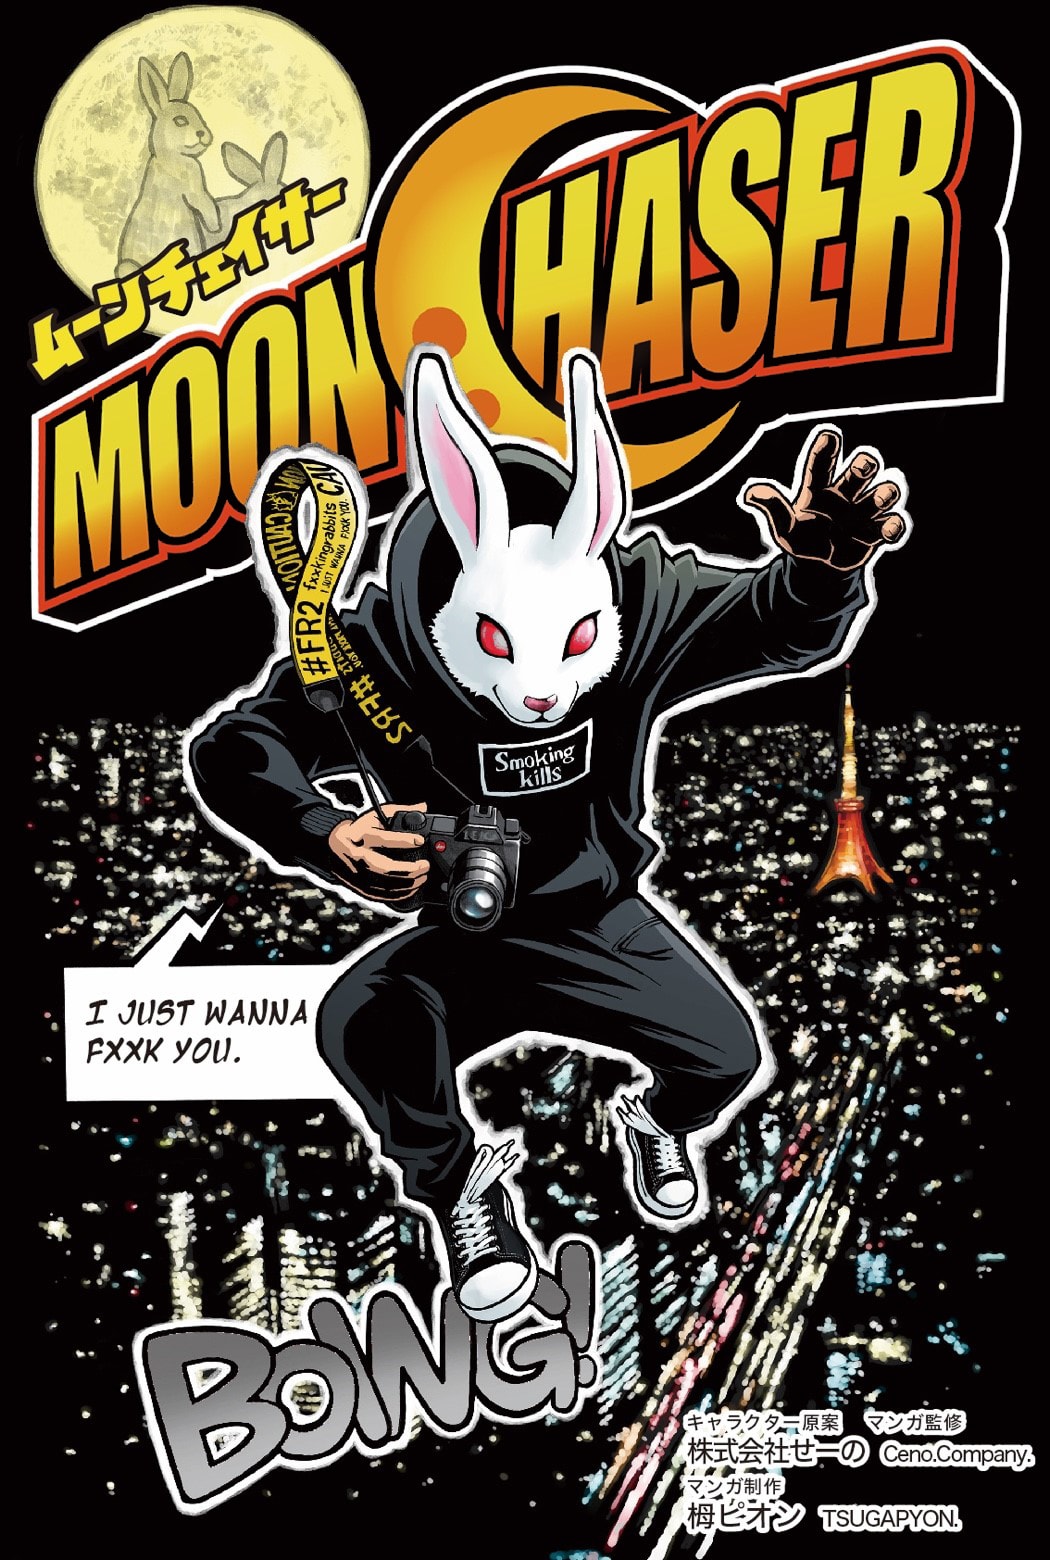 Fxxking Rabbits 創意擴散推出網絡漫畫 Moon Chaser Hypebeast